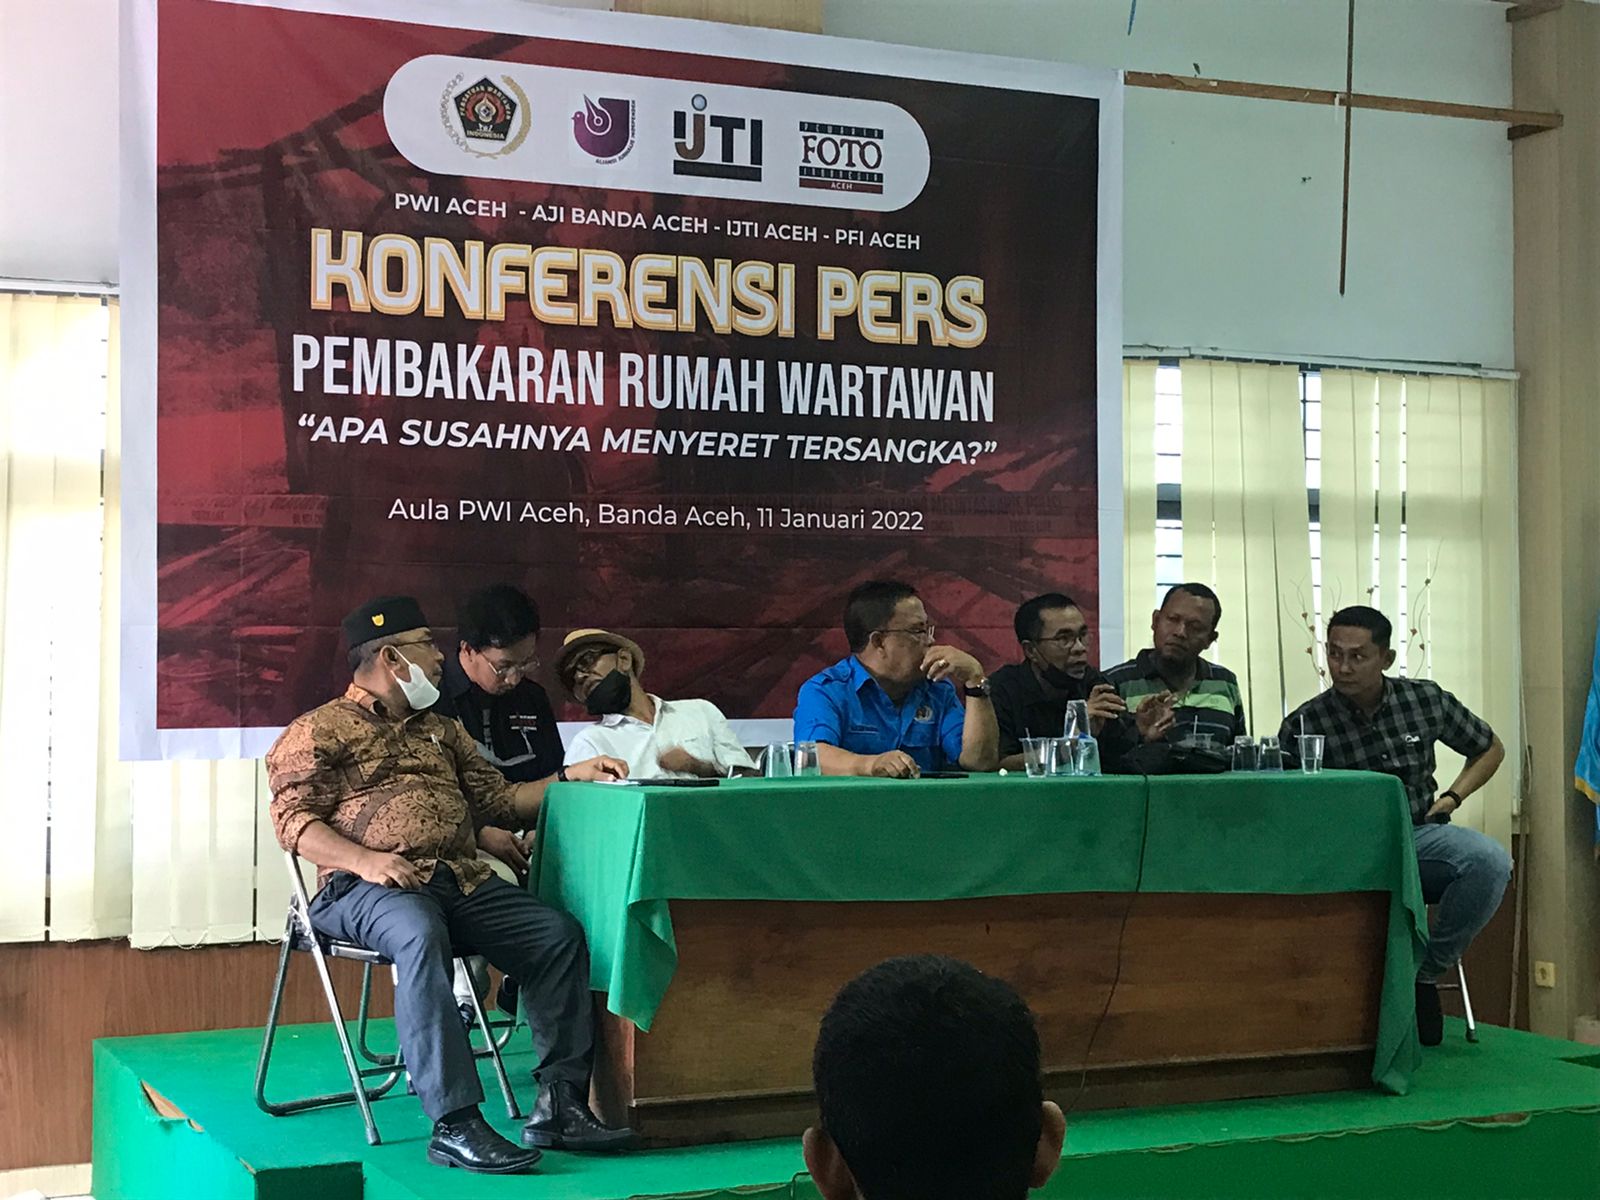 Pembakaran Rumah Wartawan, Lintas Organisasi Pers Aceh Minta Pelaku Dihukum Berat